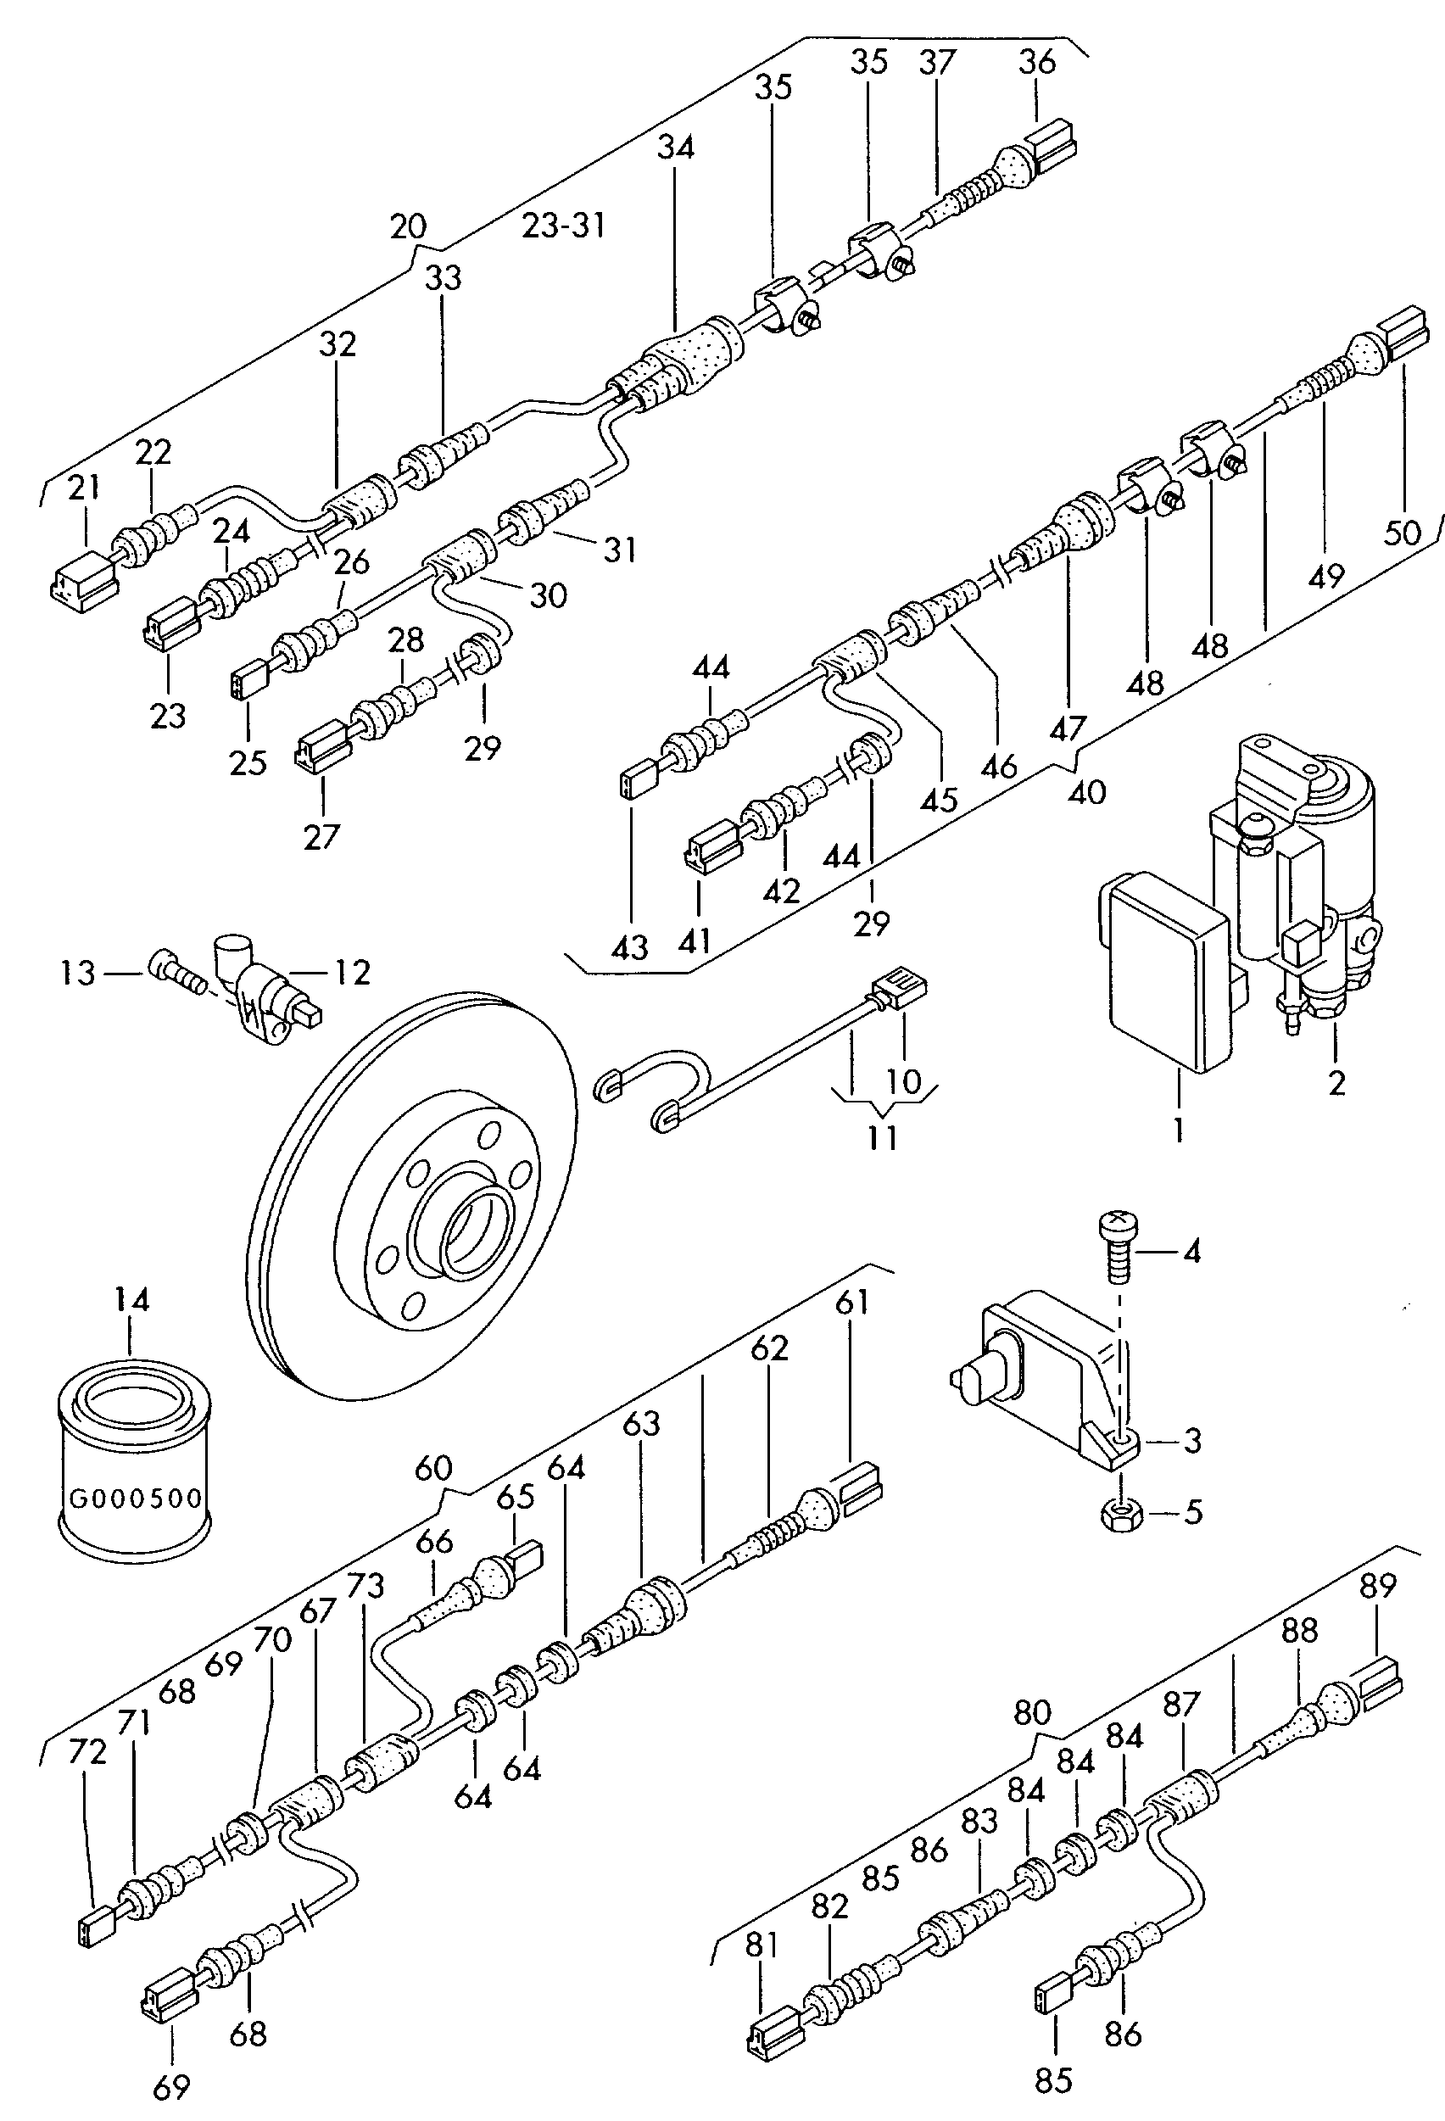 927-000 Touareg 7L speed sensor wiring harness for anti-lock brakesystem -abs-